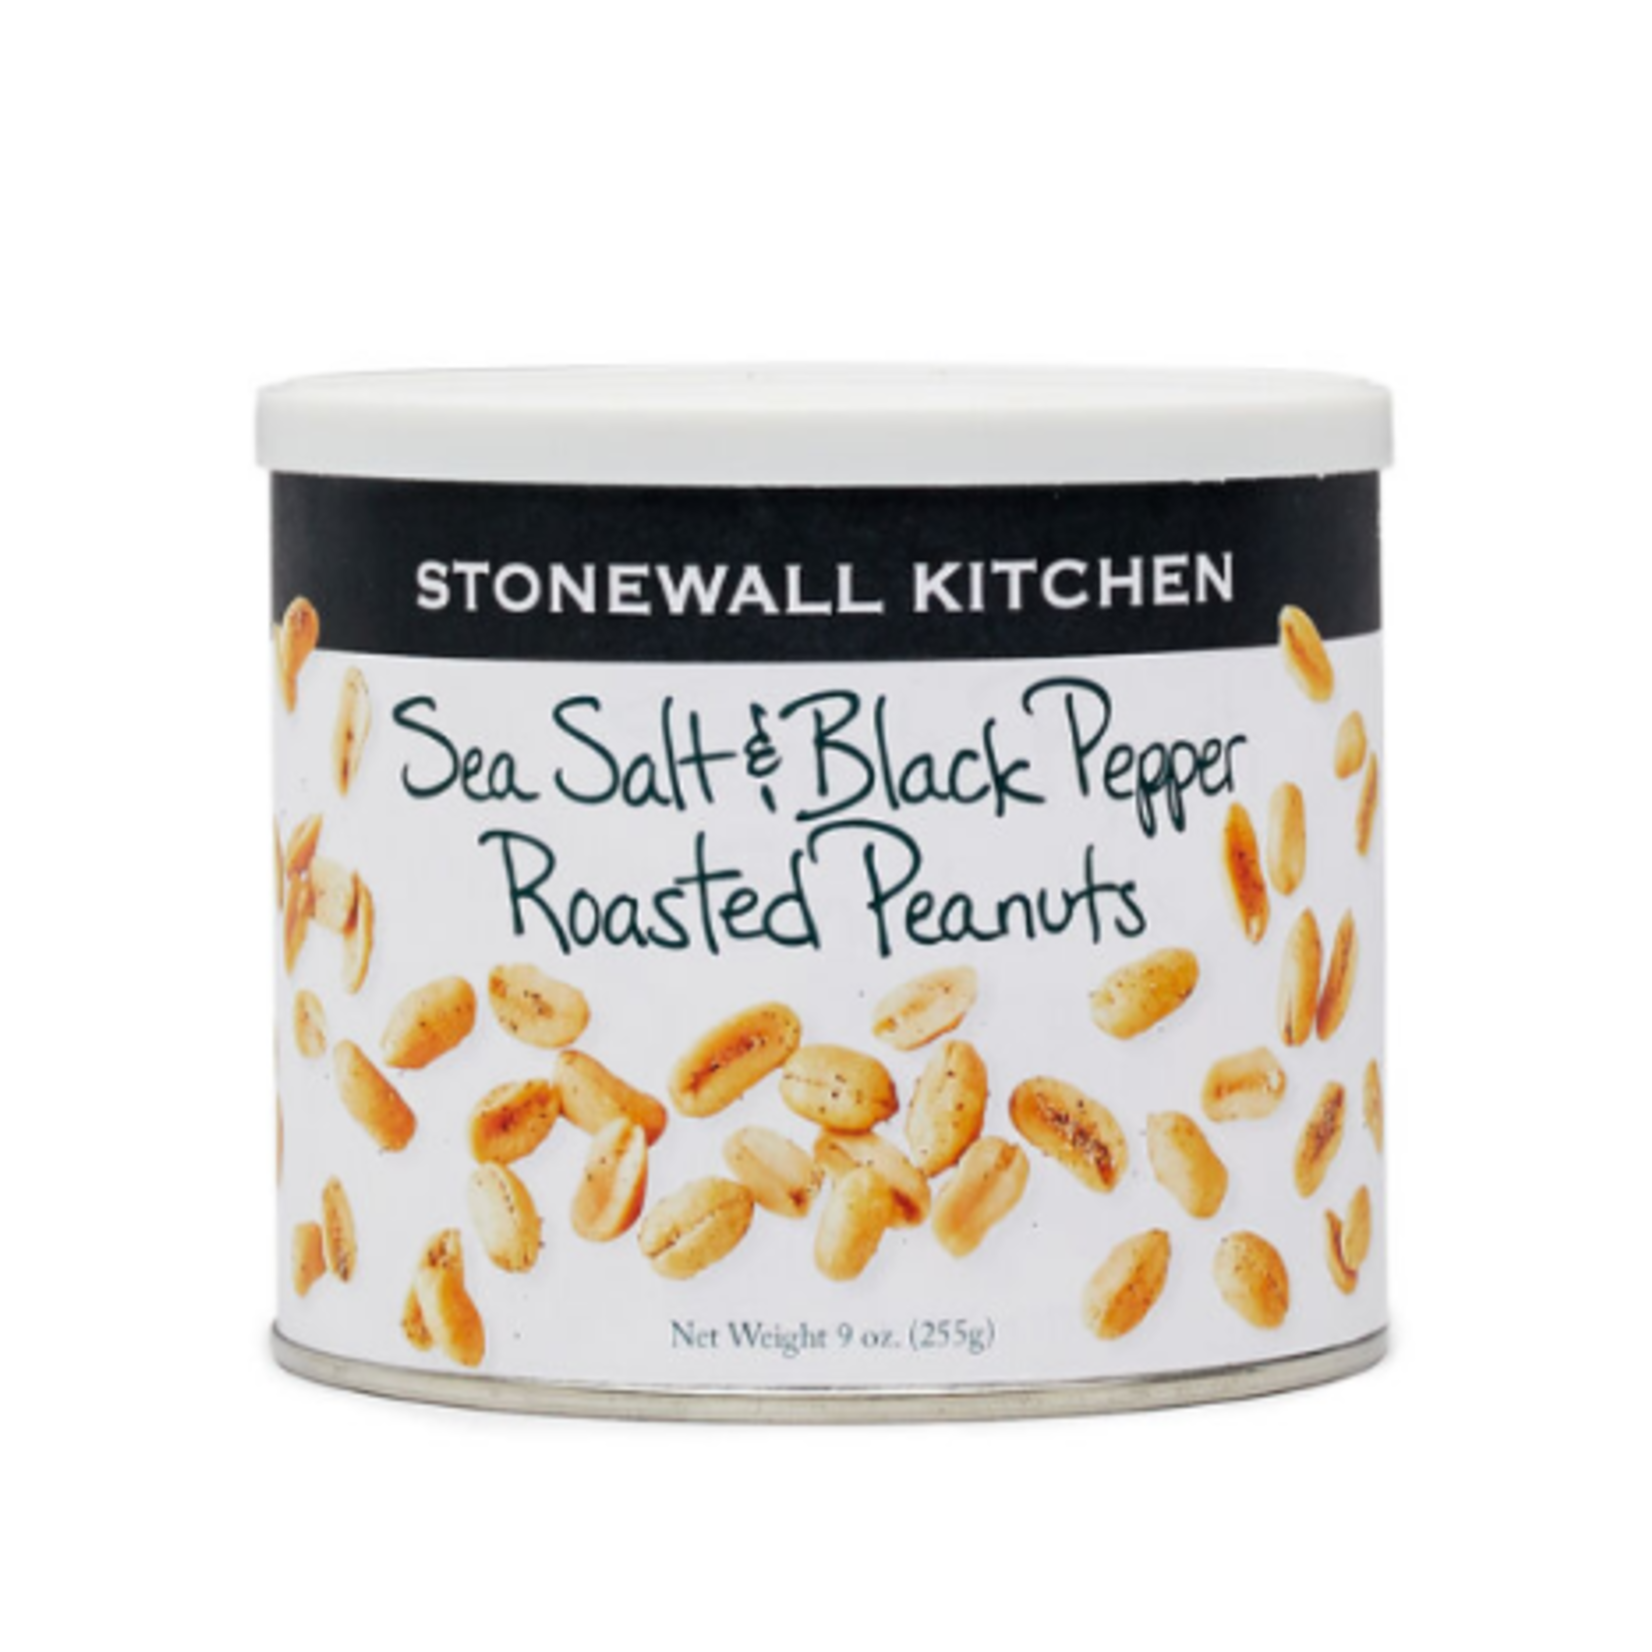 Stonewall Kitchen Sea Salt & Black Pepper Roasted Peanuts